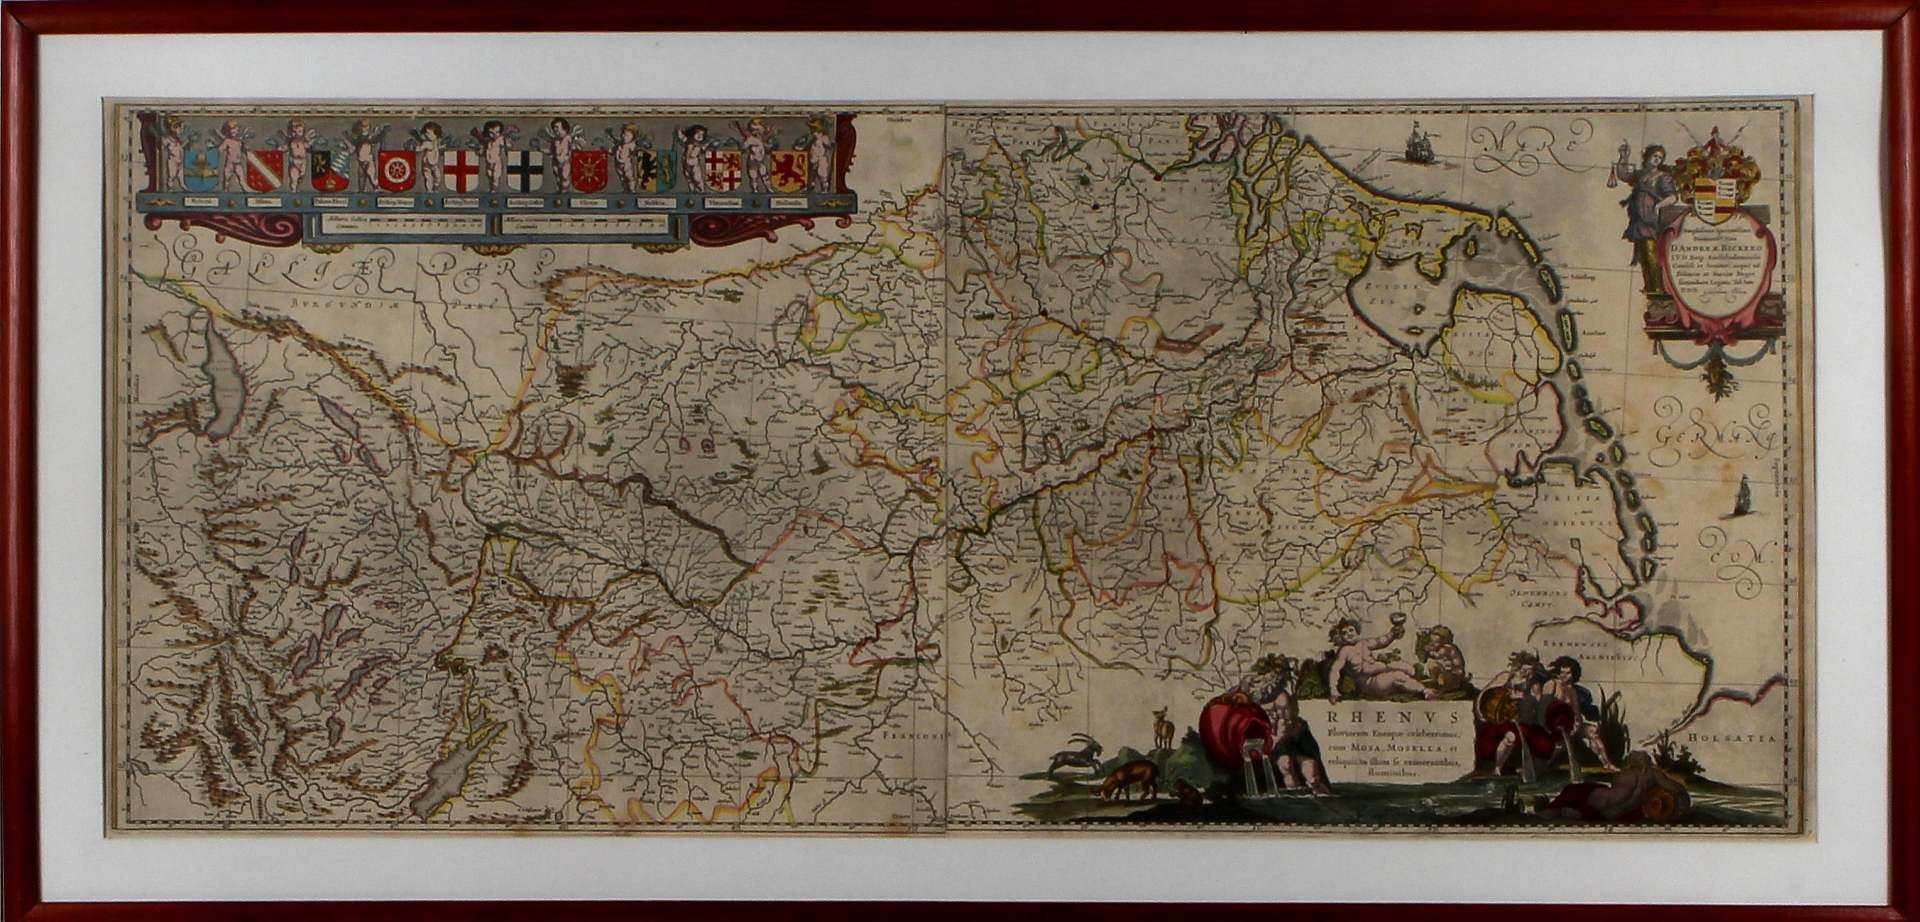 Large 17th / 18th century map by Rhenus juijelmus Blaeu, D. Andreae AE Bickero, colored engraving on